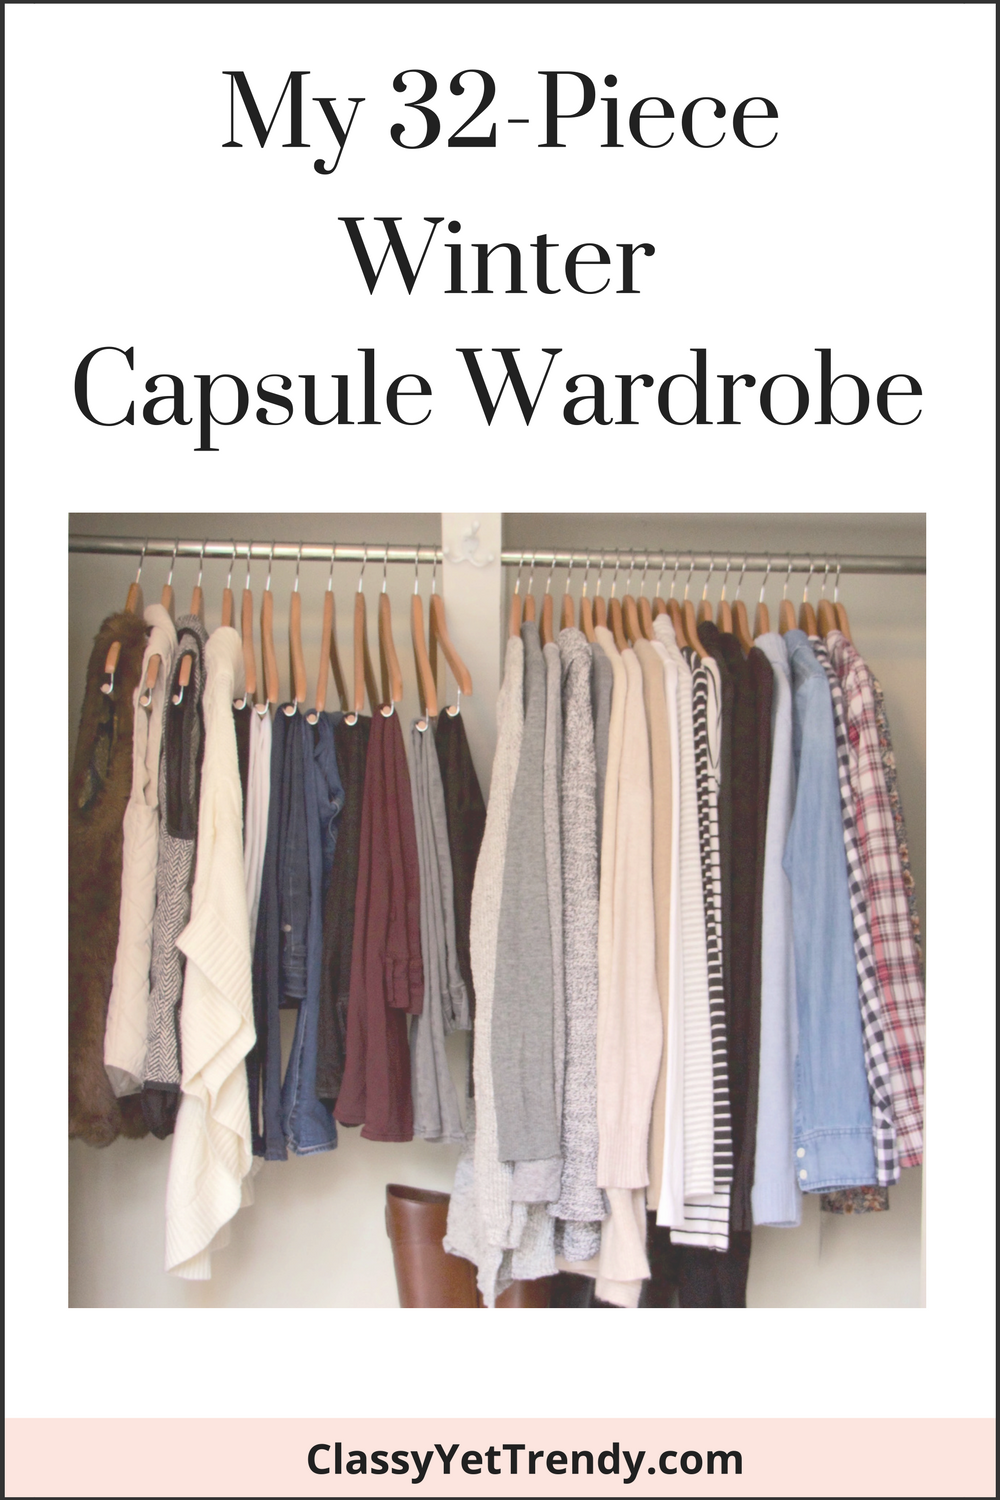 My 32-piece Winter Capsule Wardrobe